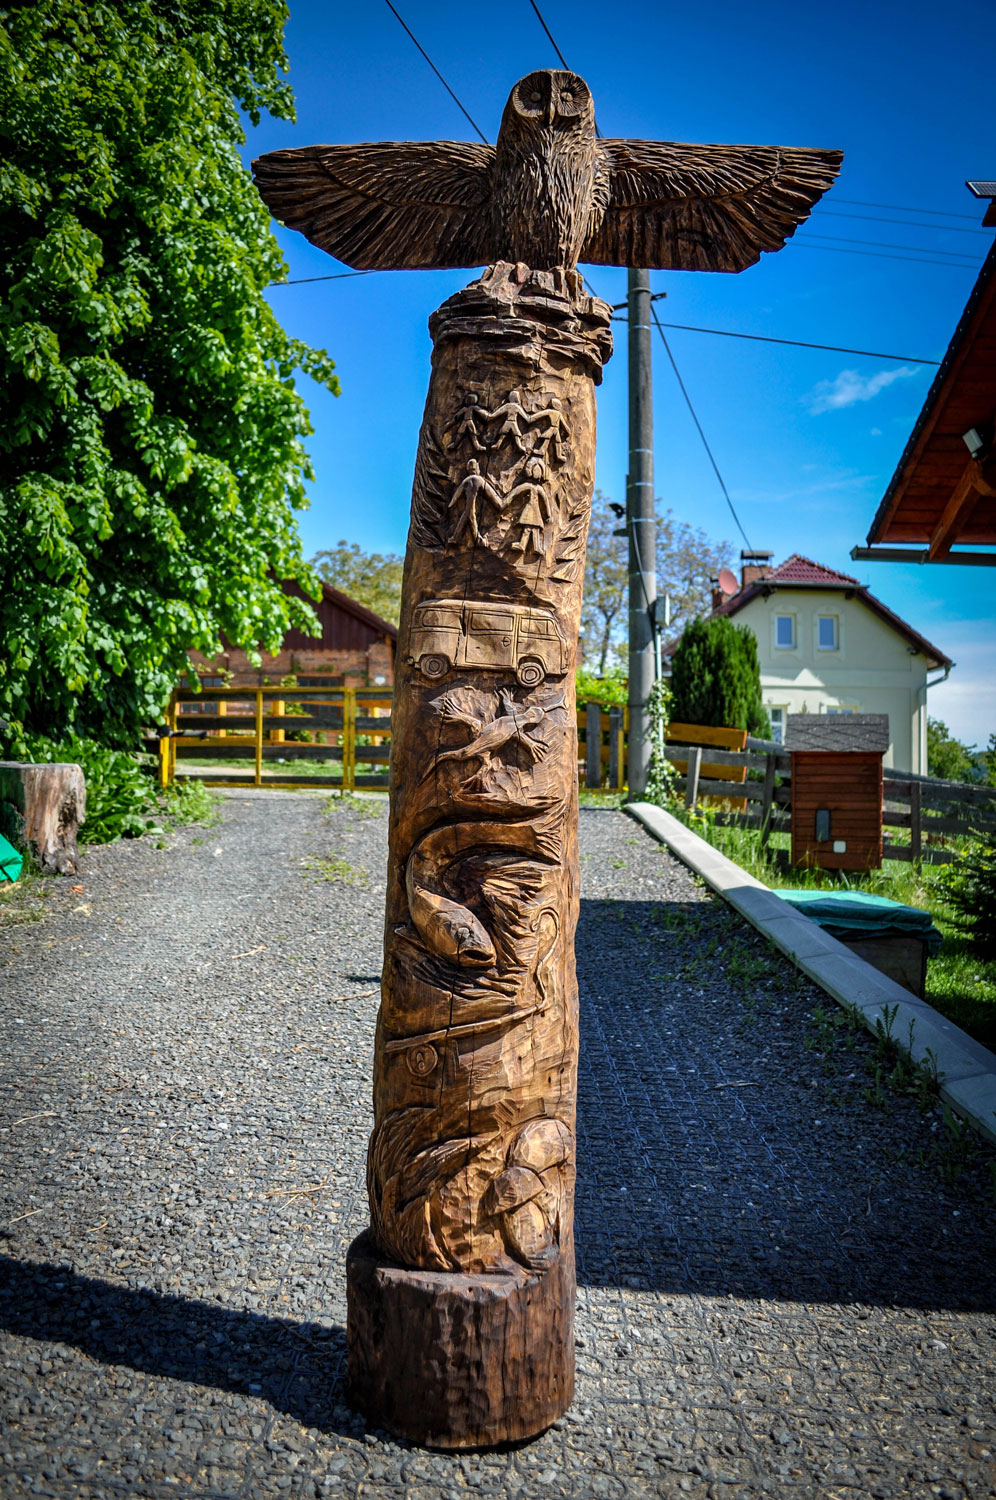 drevorezba-totem-vyrezavani-carving-wood-drevo-socha-radekzdrazil-20200522-010